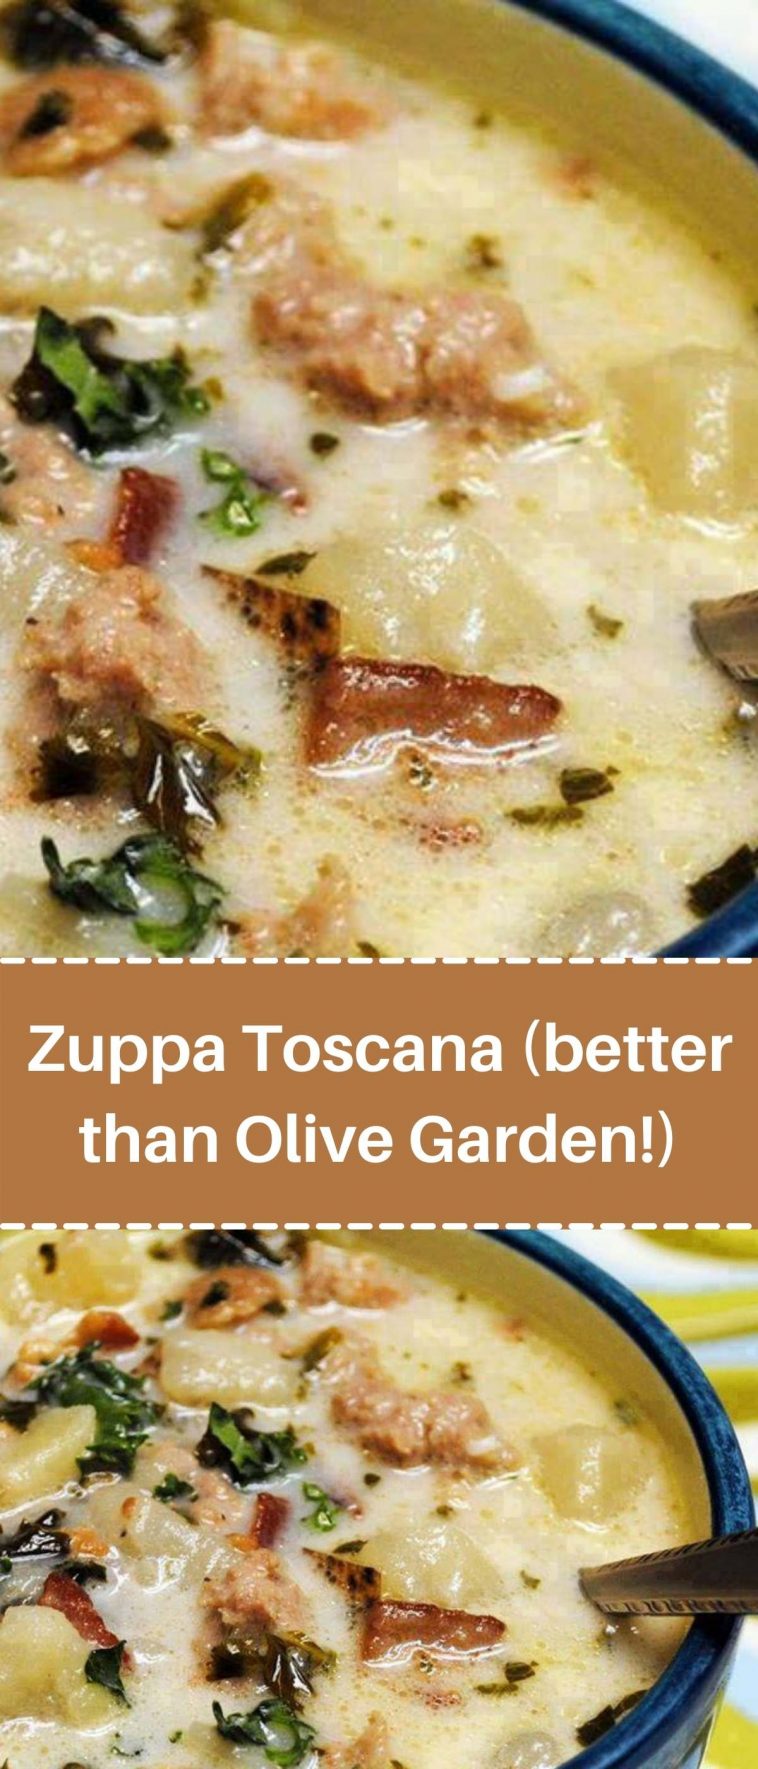 Zuppa Toscana (better than Olive Garden!)